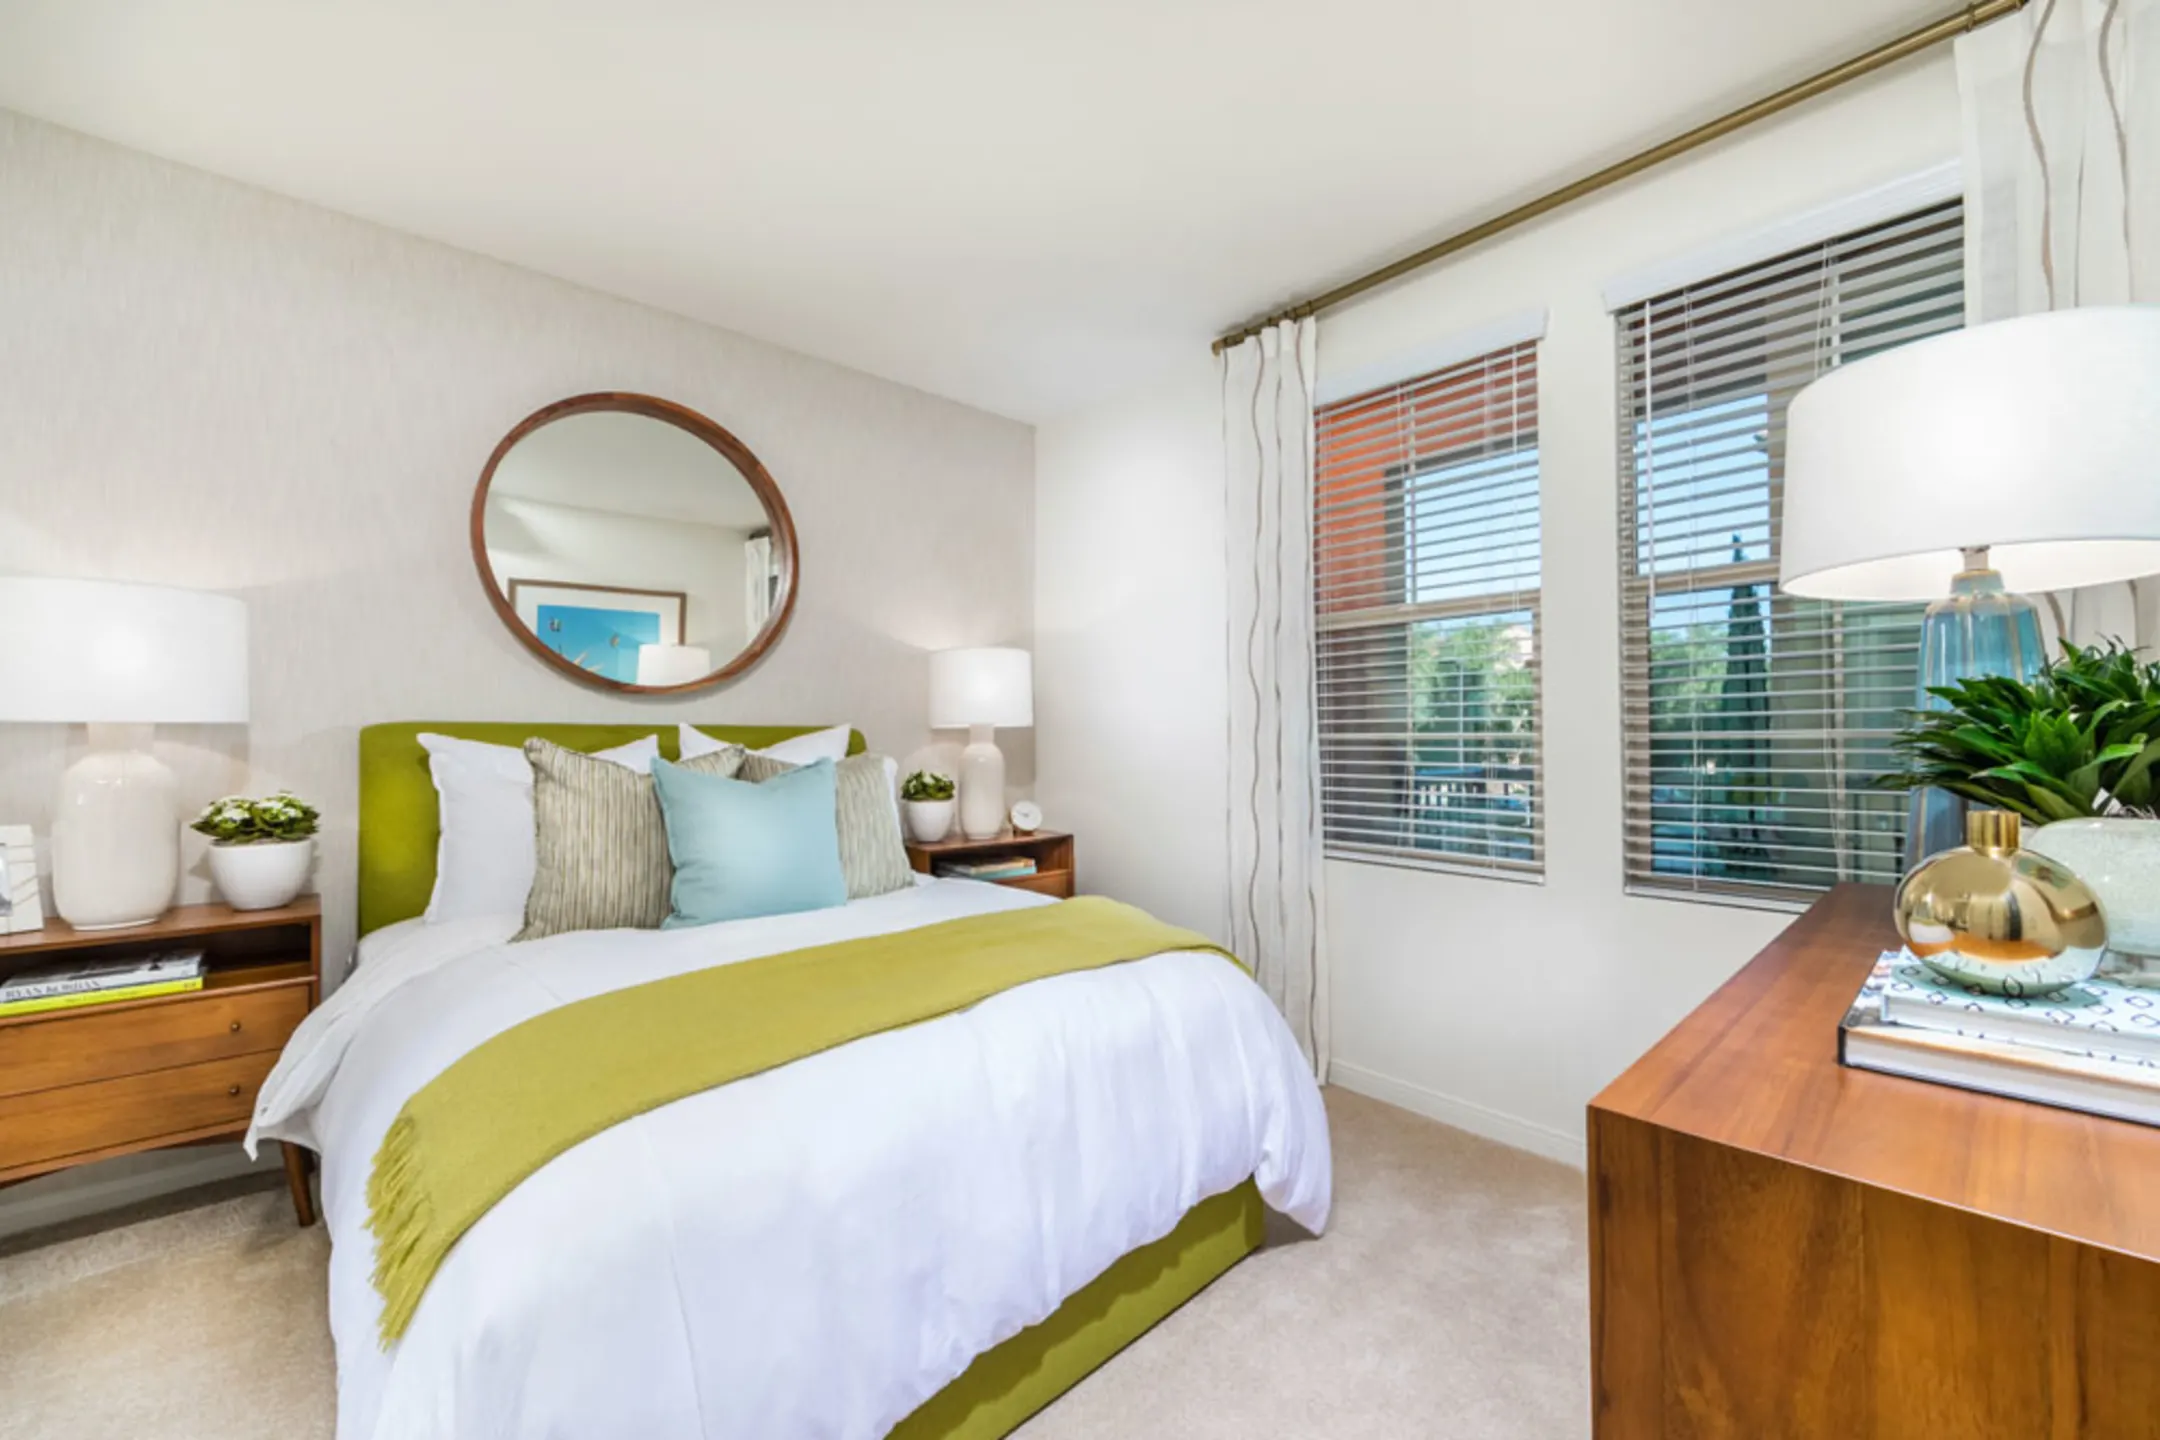 Bedroom - Los Olivos Apartment Village - Irvine, CA